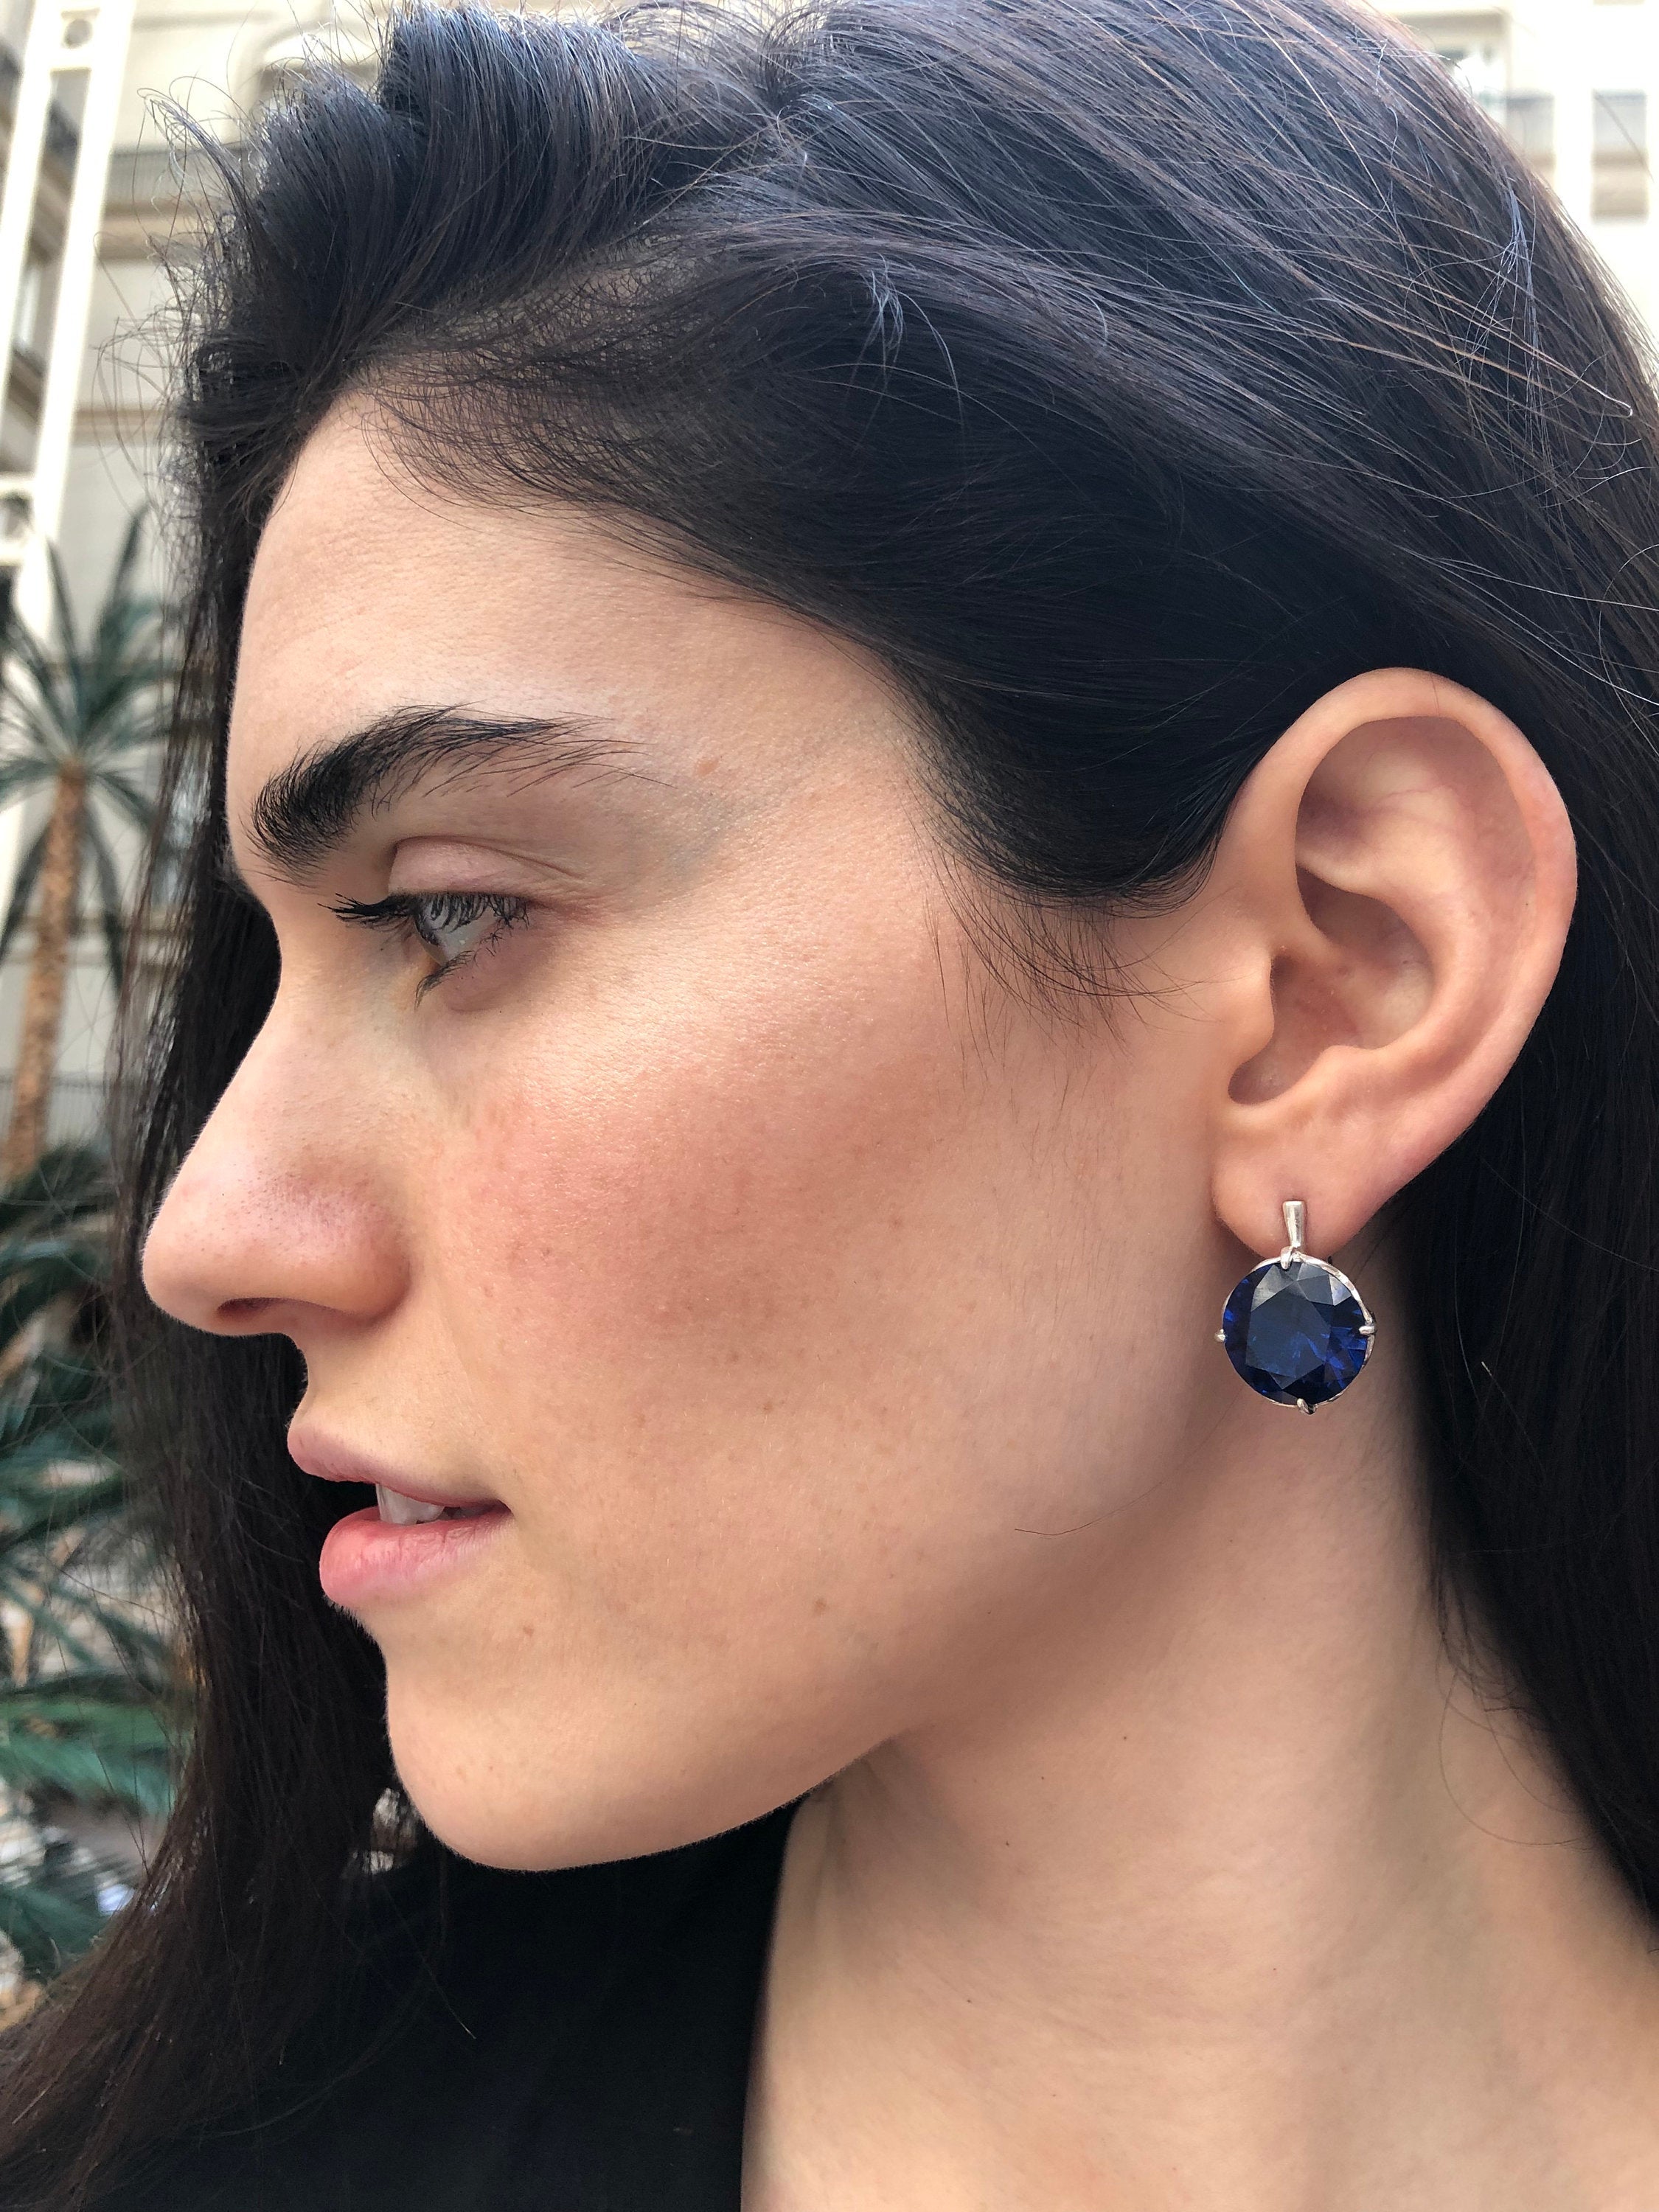 Sapphire Earrings, Created Sapphire, Round Blue Earrings, Blue Vintage Earrings, Blue Diamond Earrings, Royal Blue Earrings, Silver Earrings